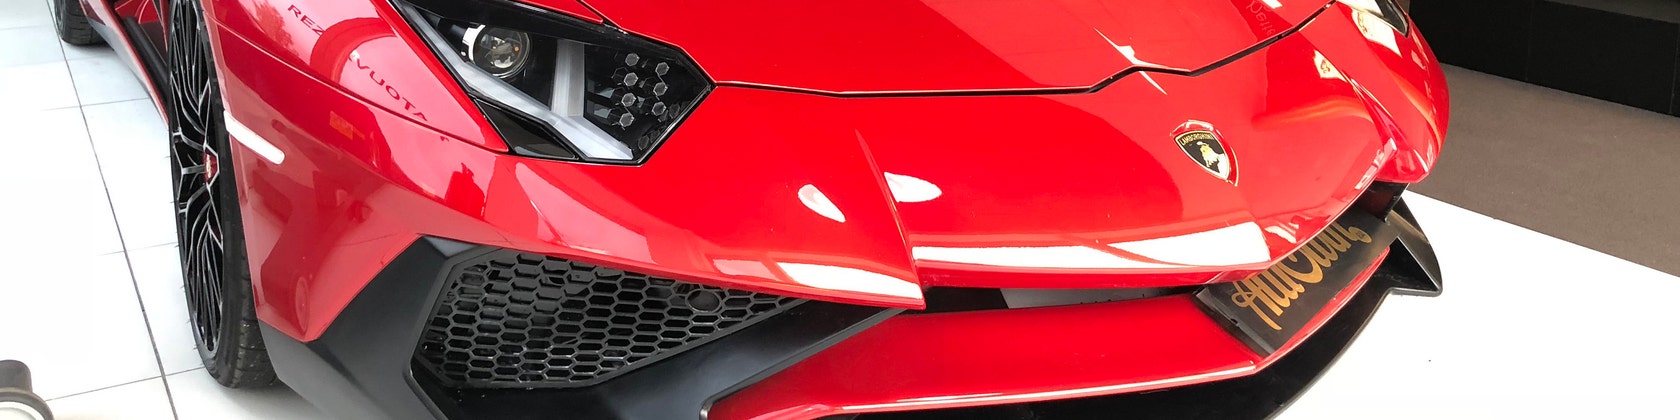 Kit detailing Esterni McLaren – Passione Motori shop